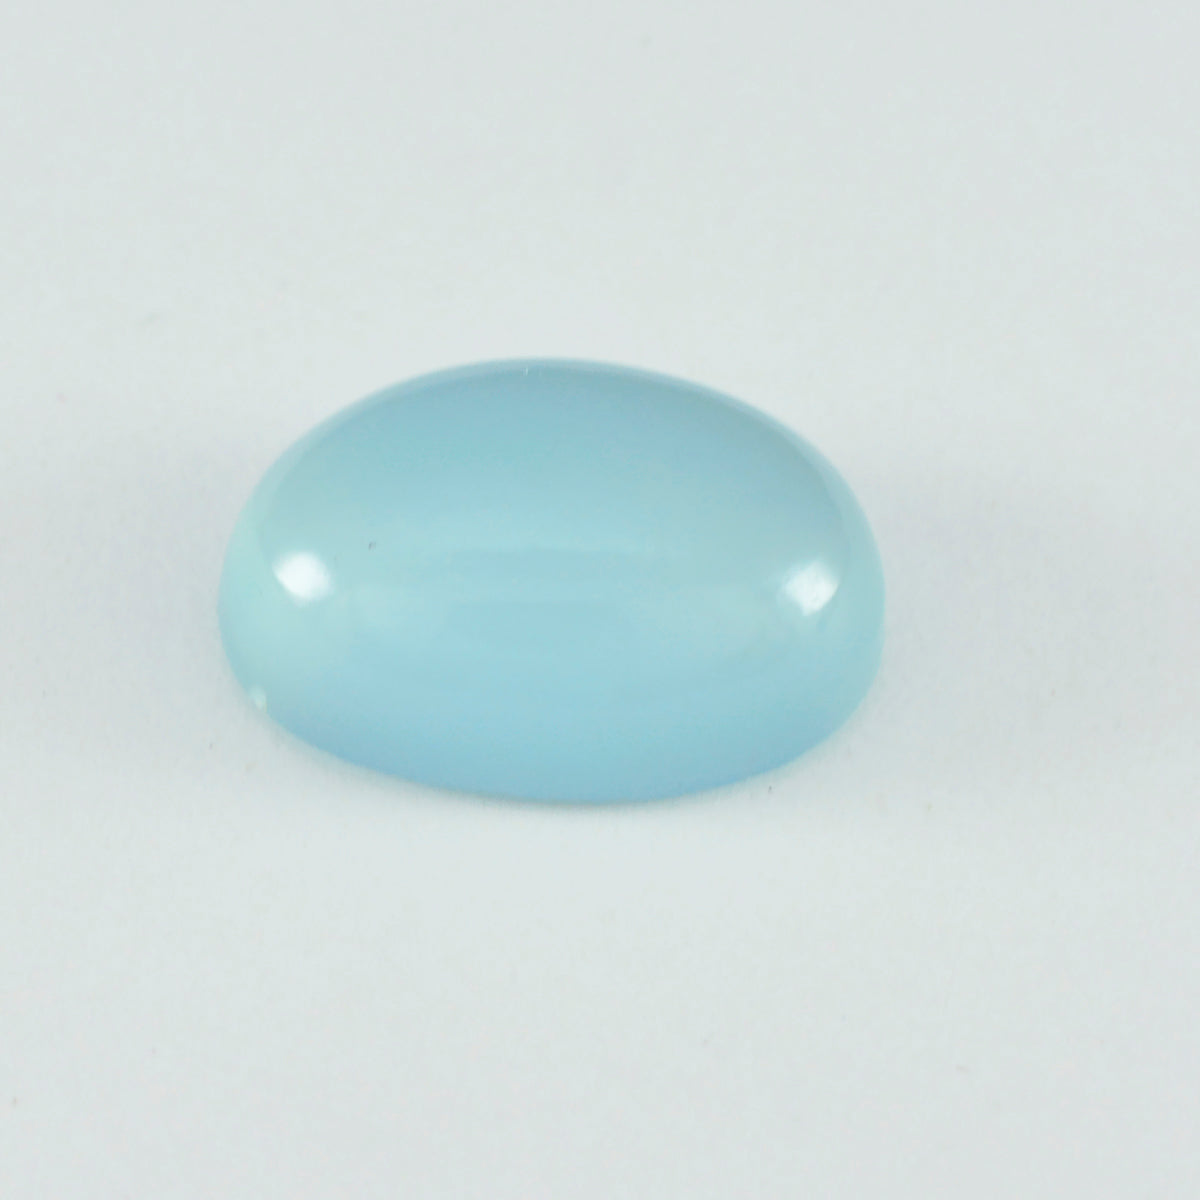 riyogems 1 st aqua chalcedony cabochon 9x11 mm oval form snygg kvalitets lös pärla